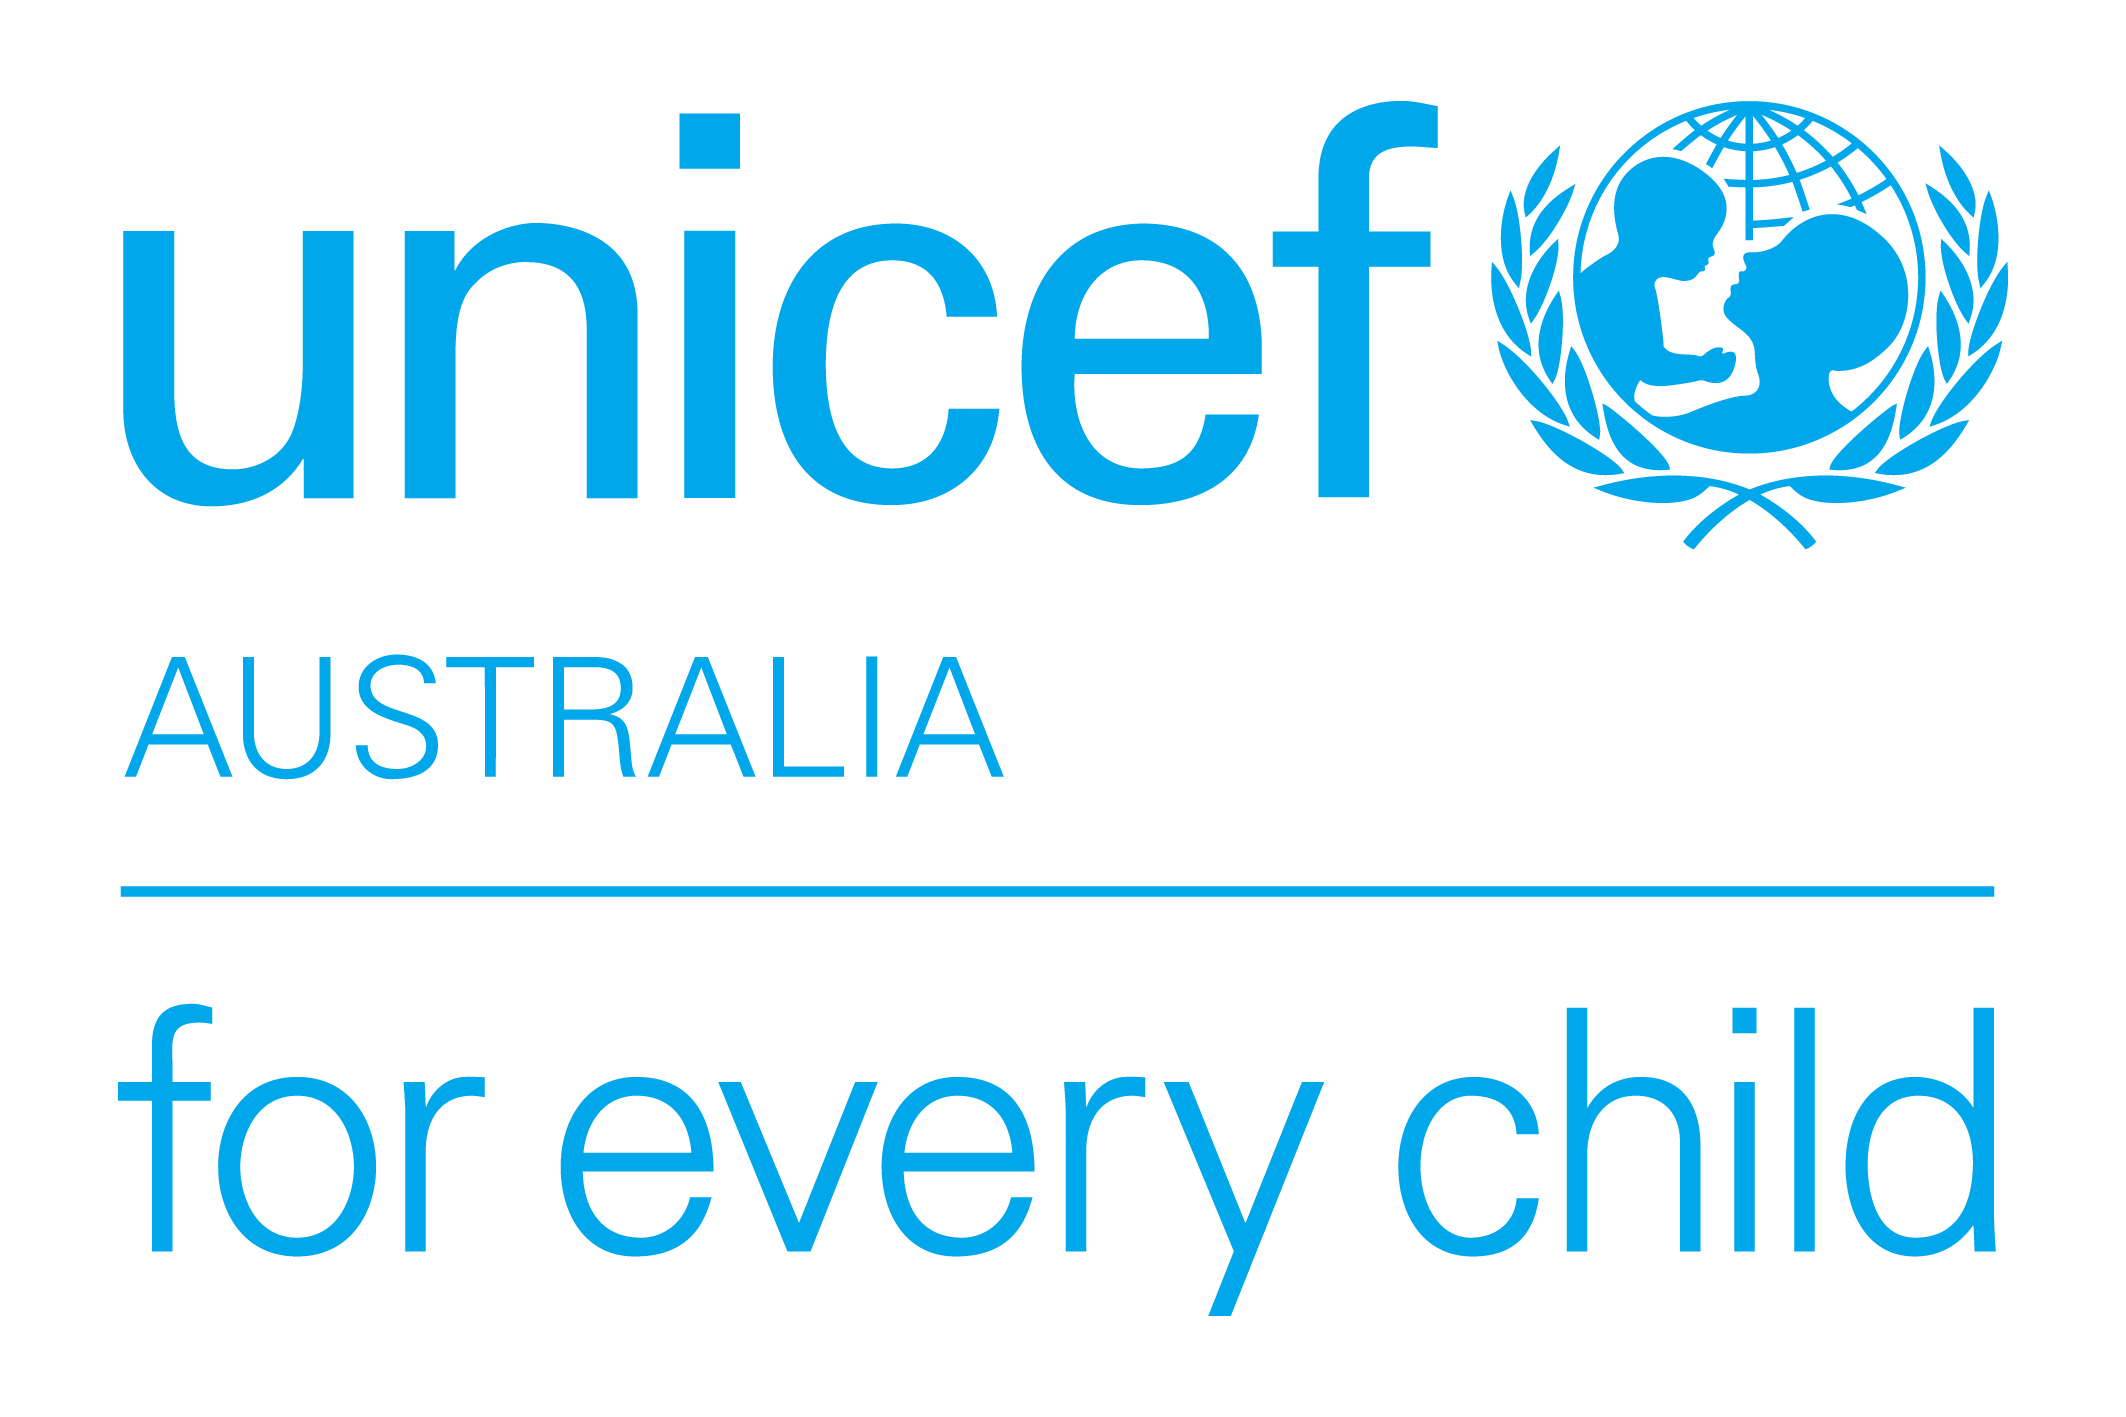 UNICEF AUSTRALIA foreverychild VERT cyan